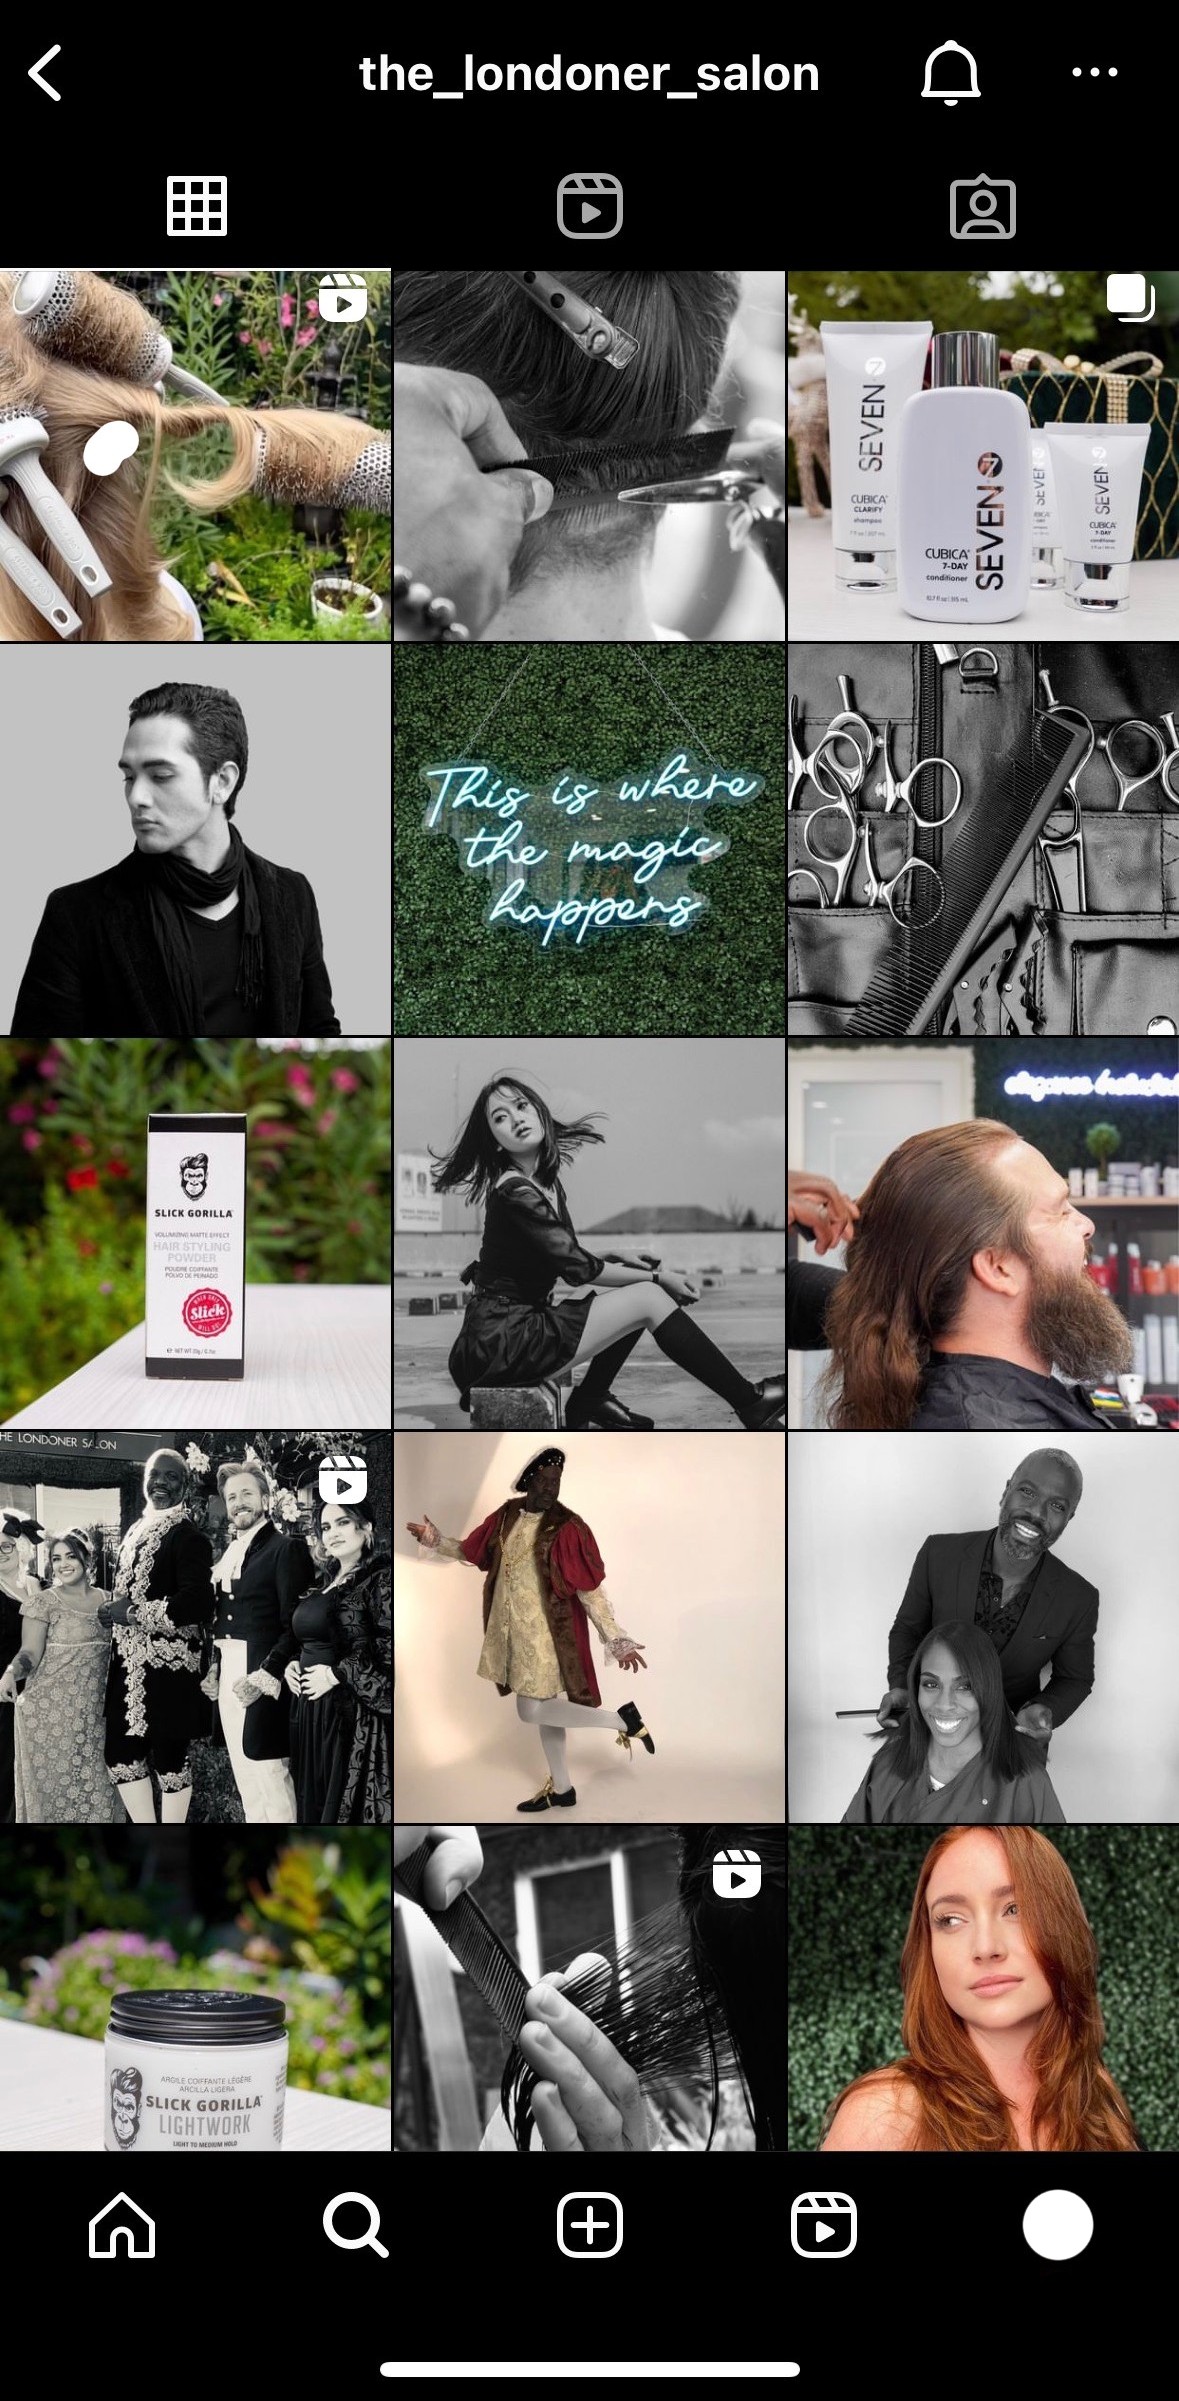 The Londoner Salon Instagram Grid